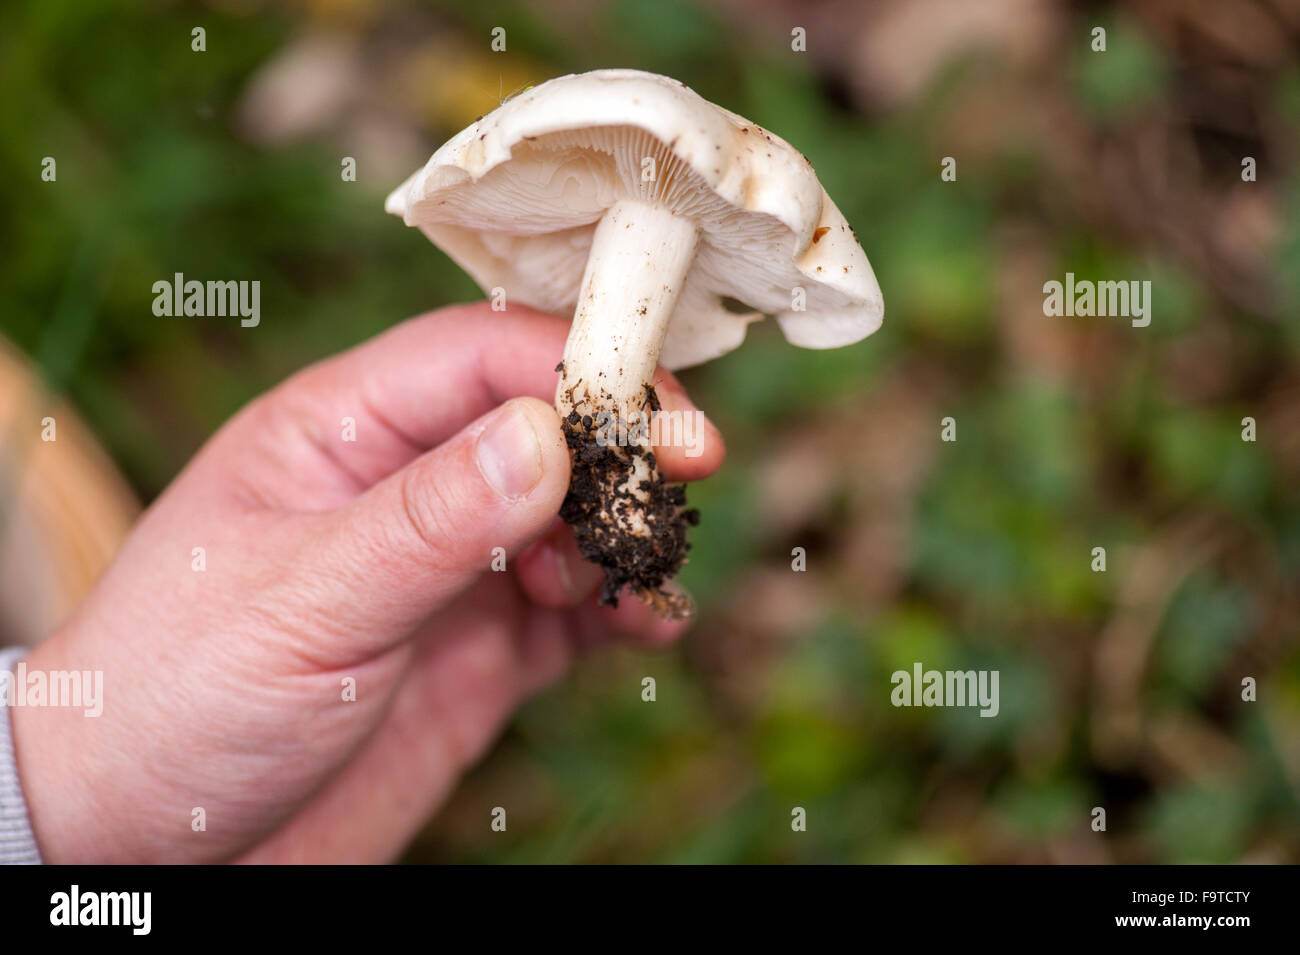 Holding a fresh wild mushroom by stalk Stock Photo